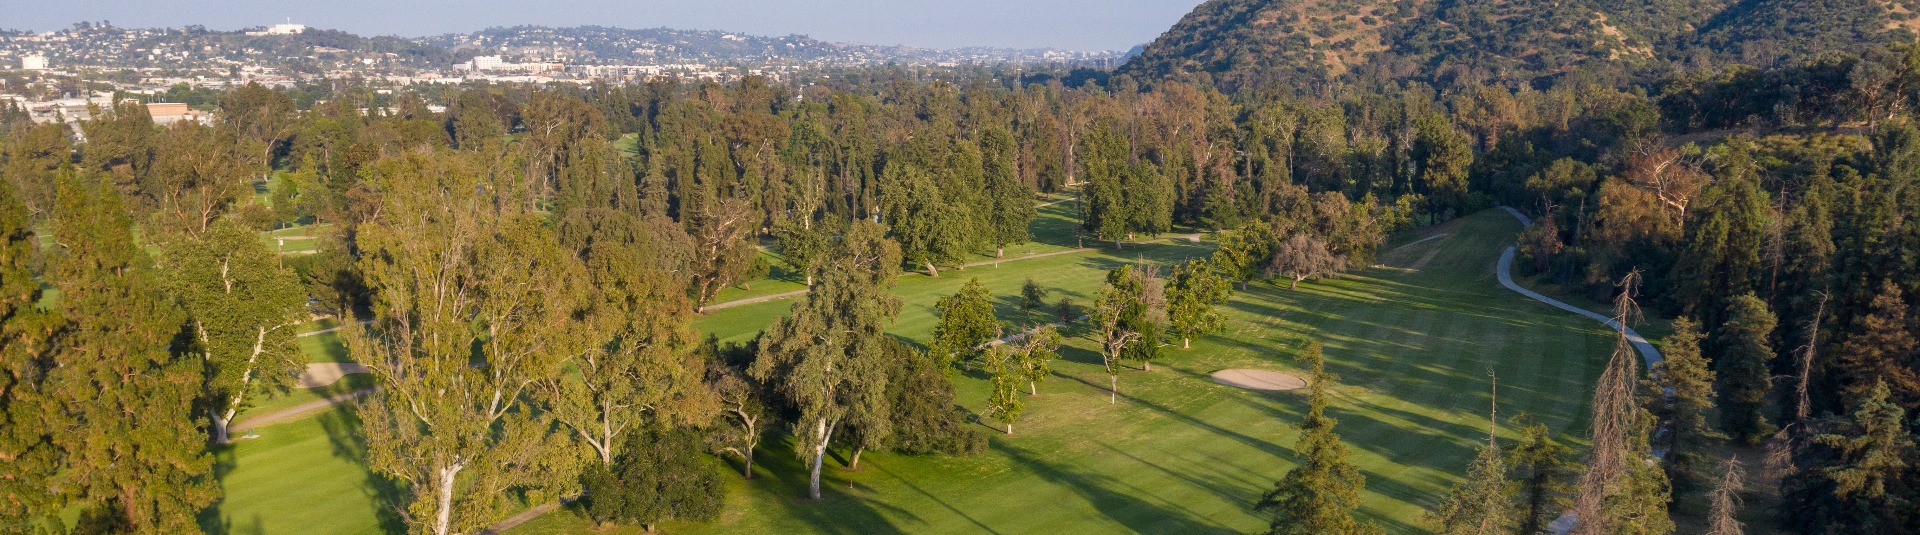 Home - L.A. City Golf Courses